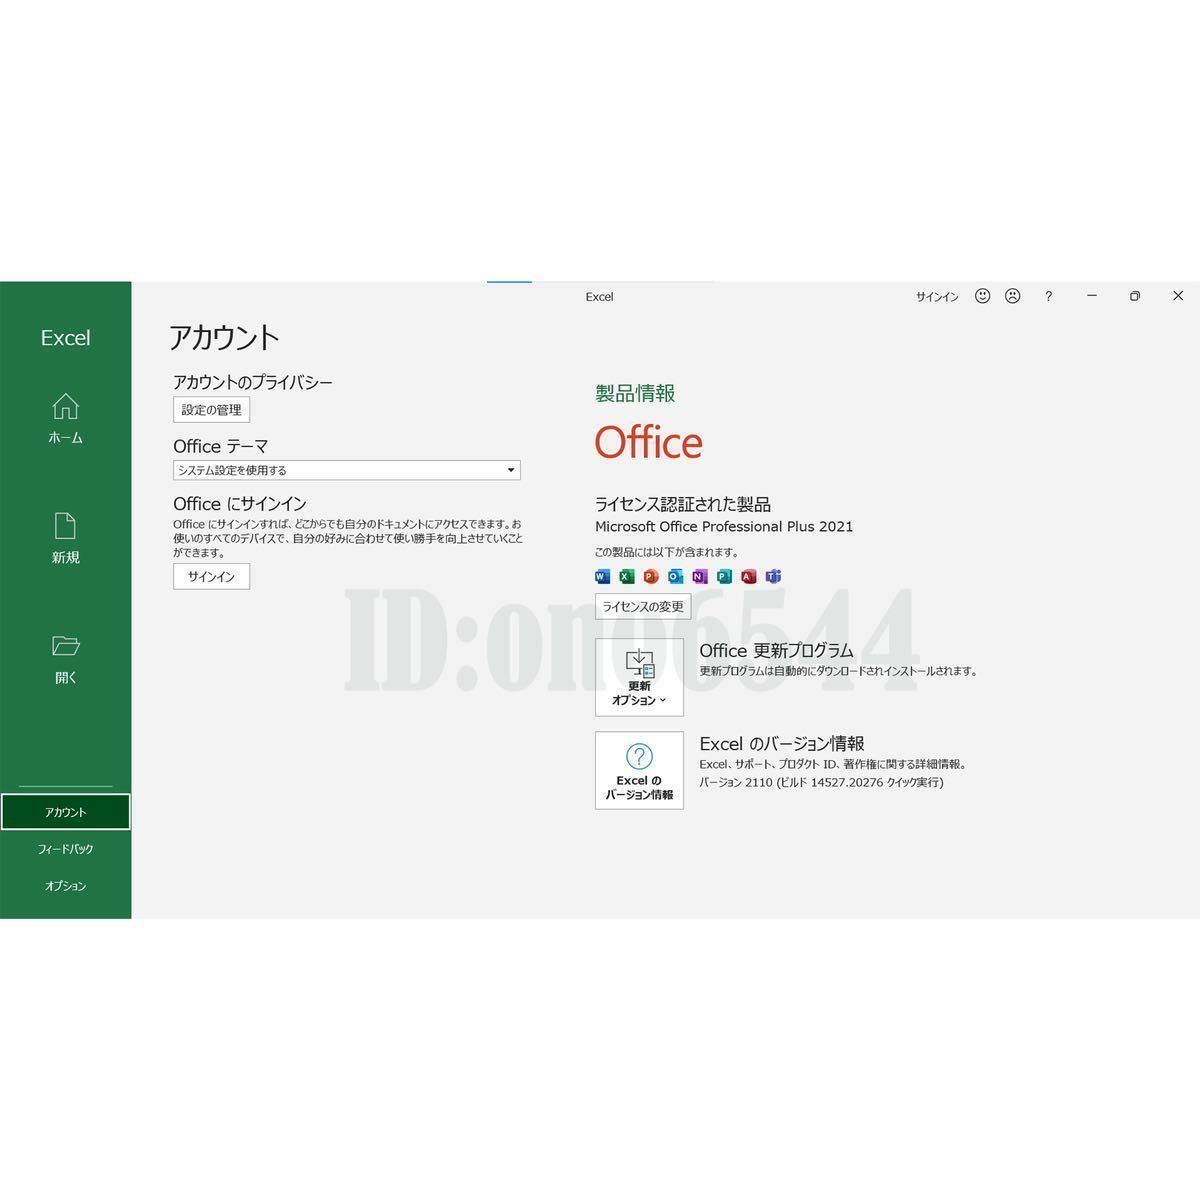 Office2021 ダウンロード版Microsoft Office 2021 Professional Plus プロダクトキー オフィス2021 正規認証保証 手順書あり サポート付きO_画像6